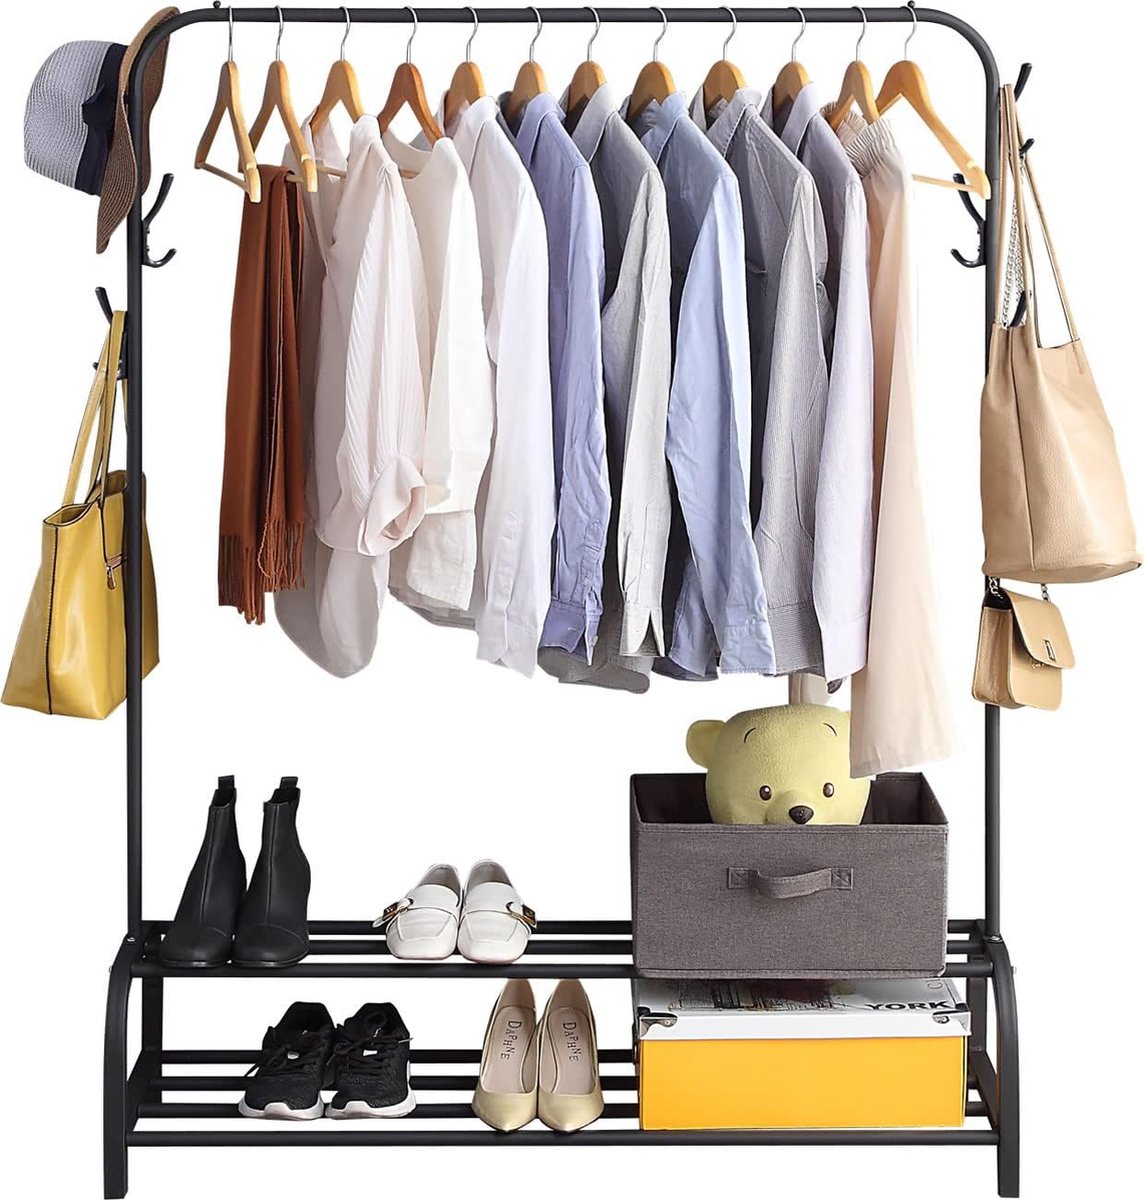 Clothes Rack, Freestanding Coat Rack, Multifunctional Metal Clothes Rail, Storage Shelf and 6 Hooks Hangers, Black